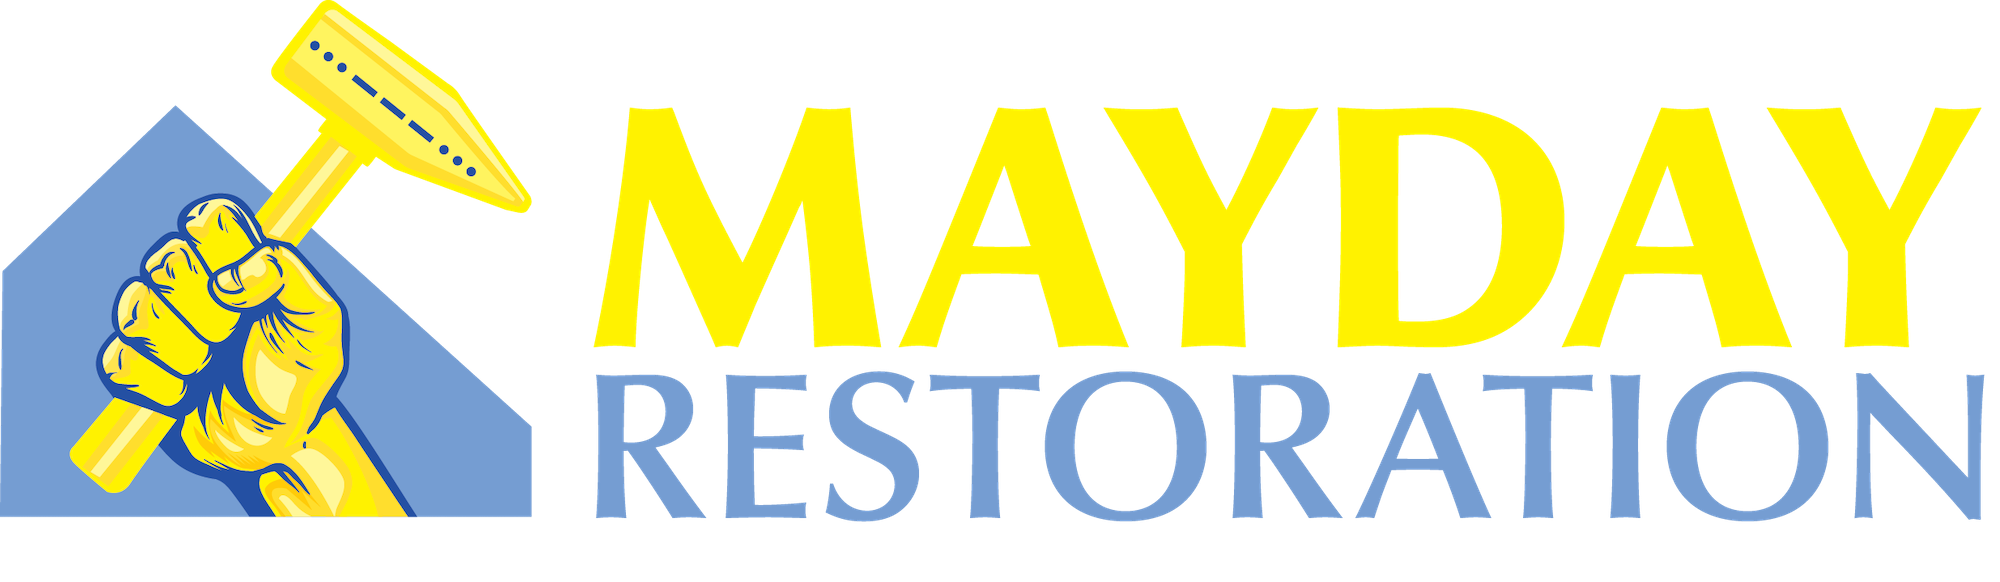 Mayday Restoration, LLC Logo